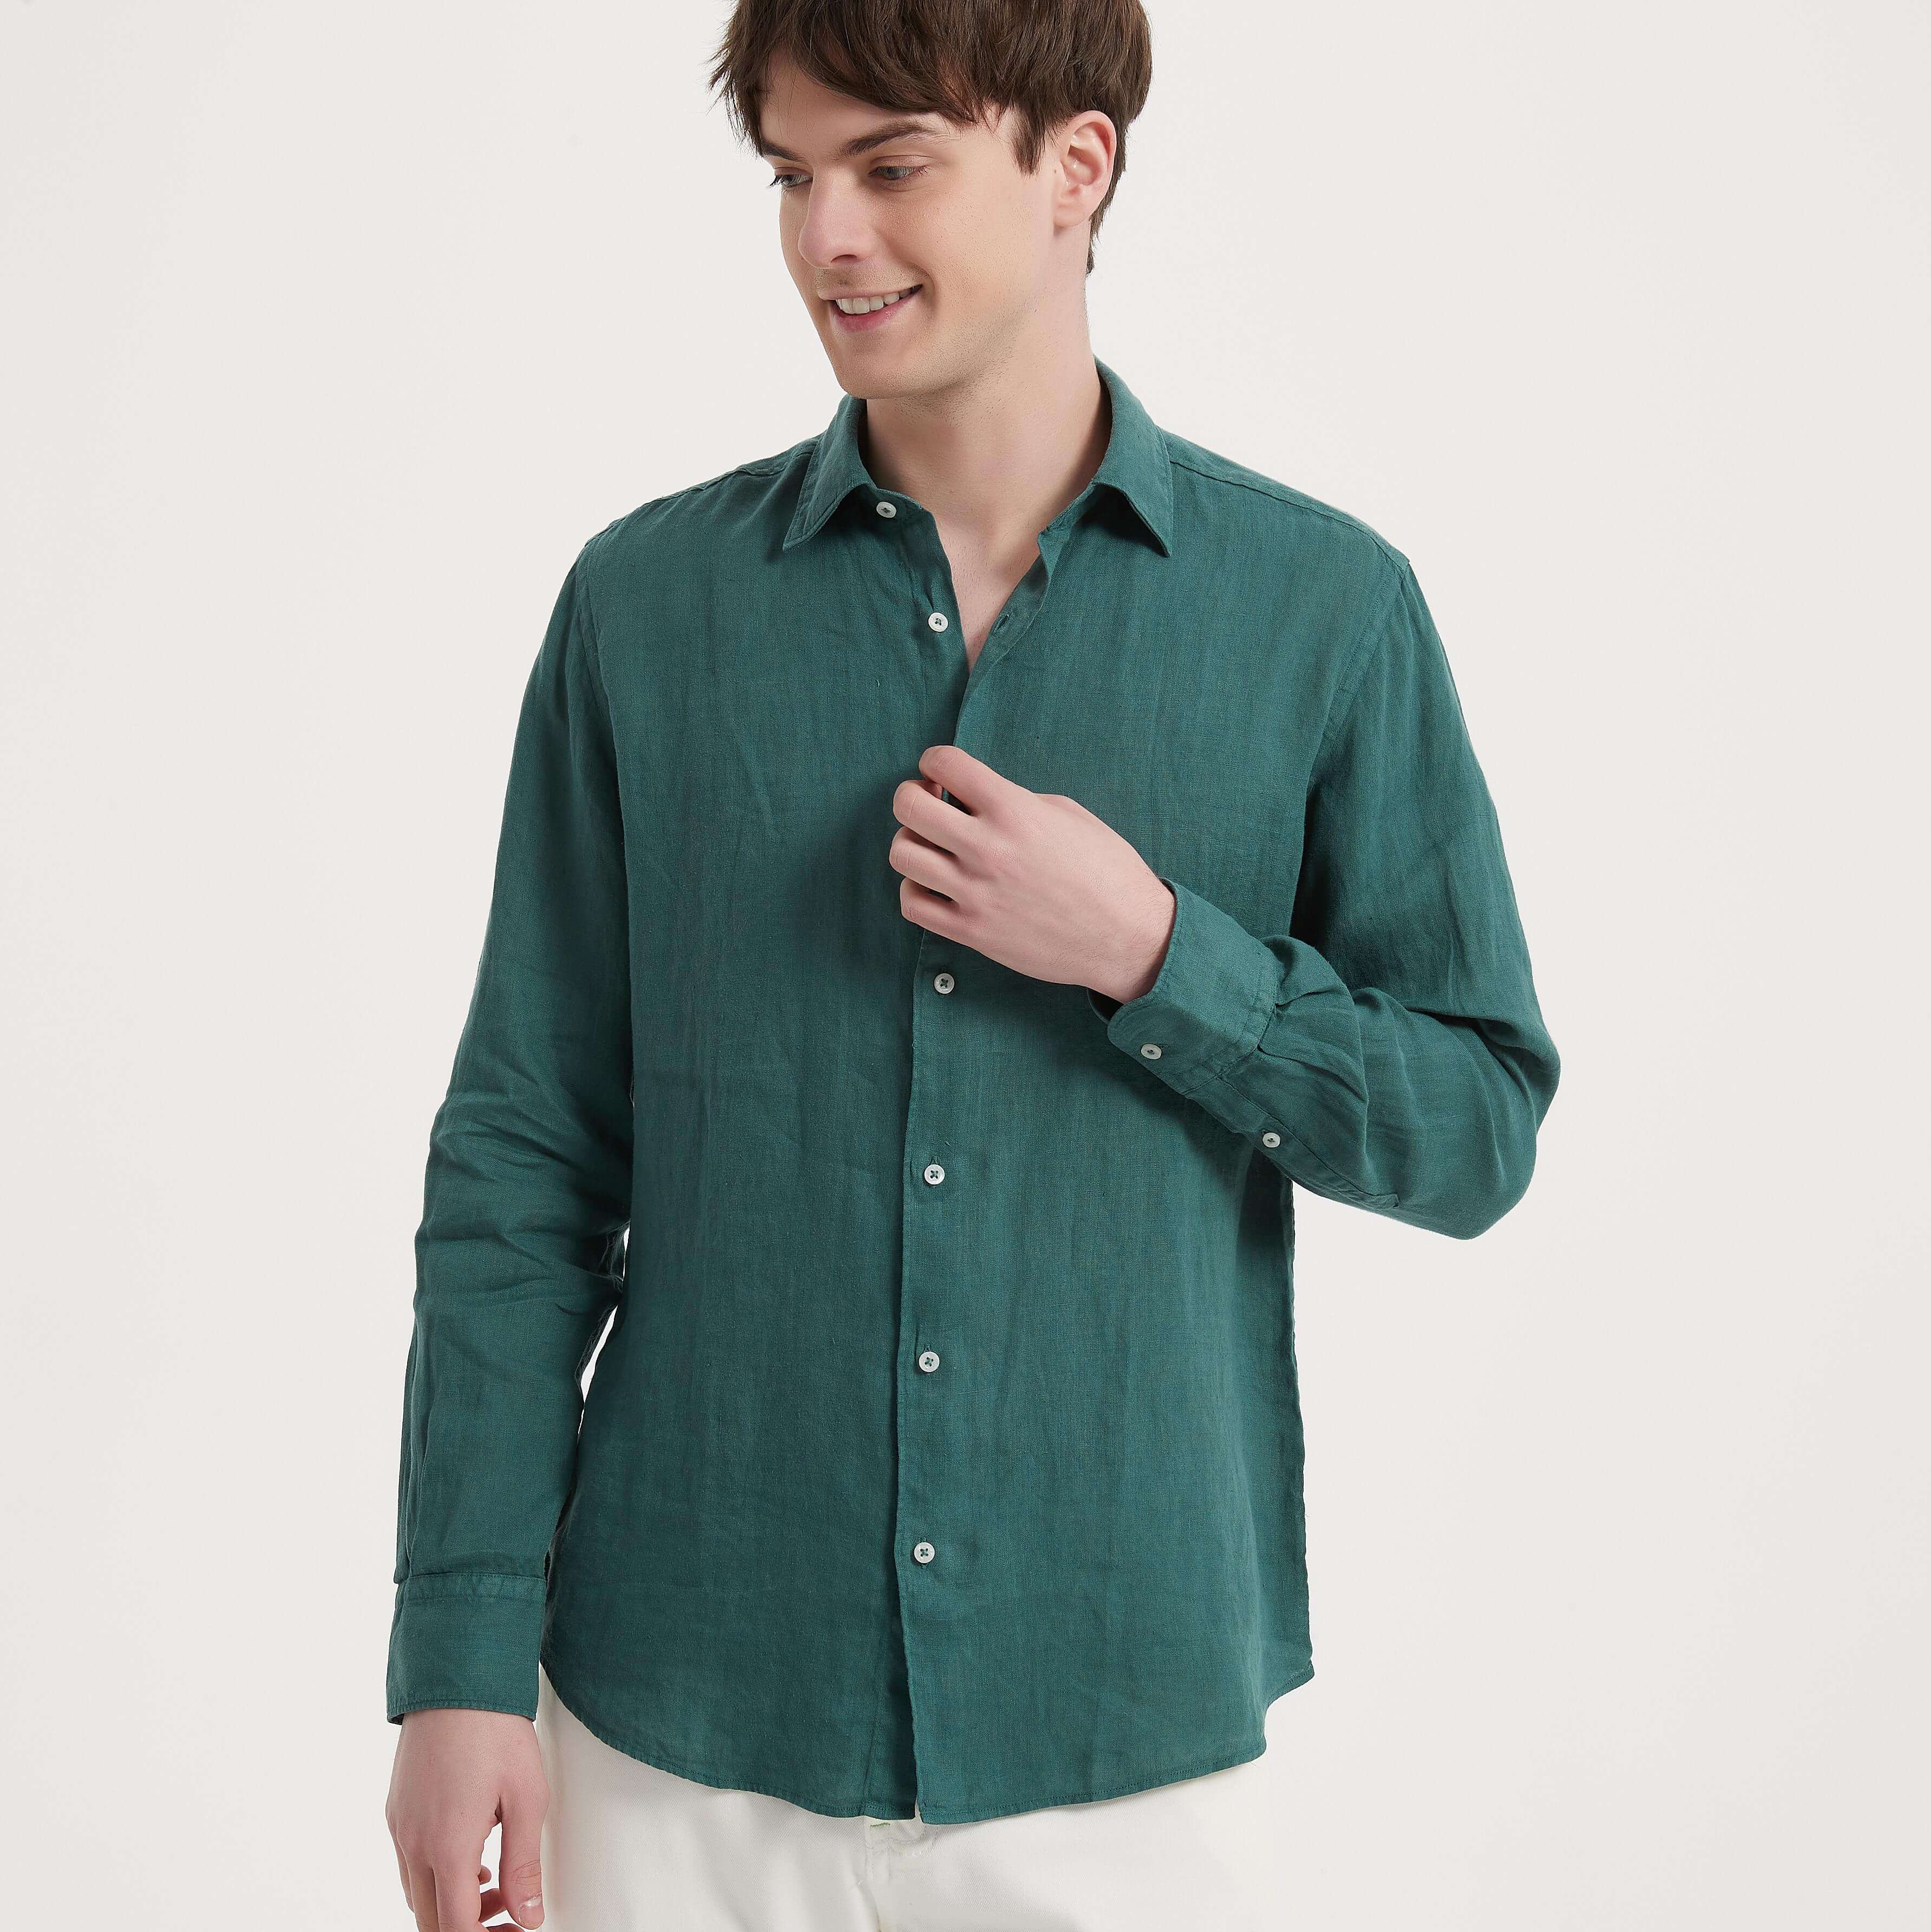 A La Mode 100% European Linen Shirt for Men : : Clothing